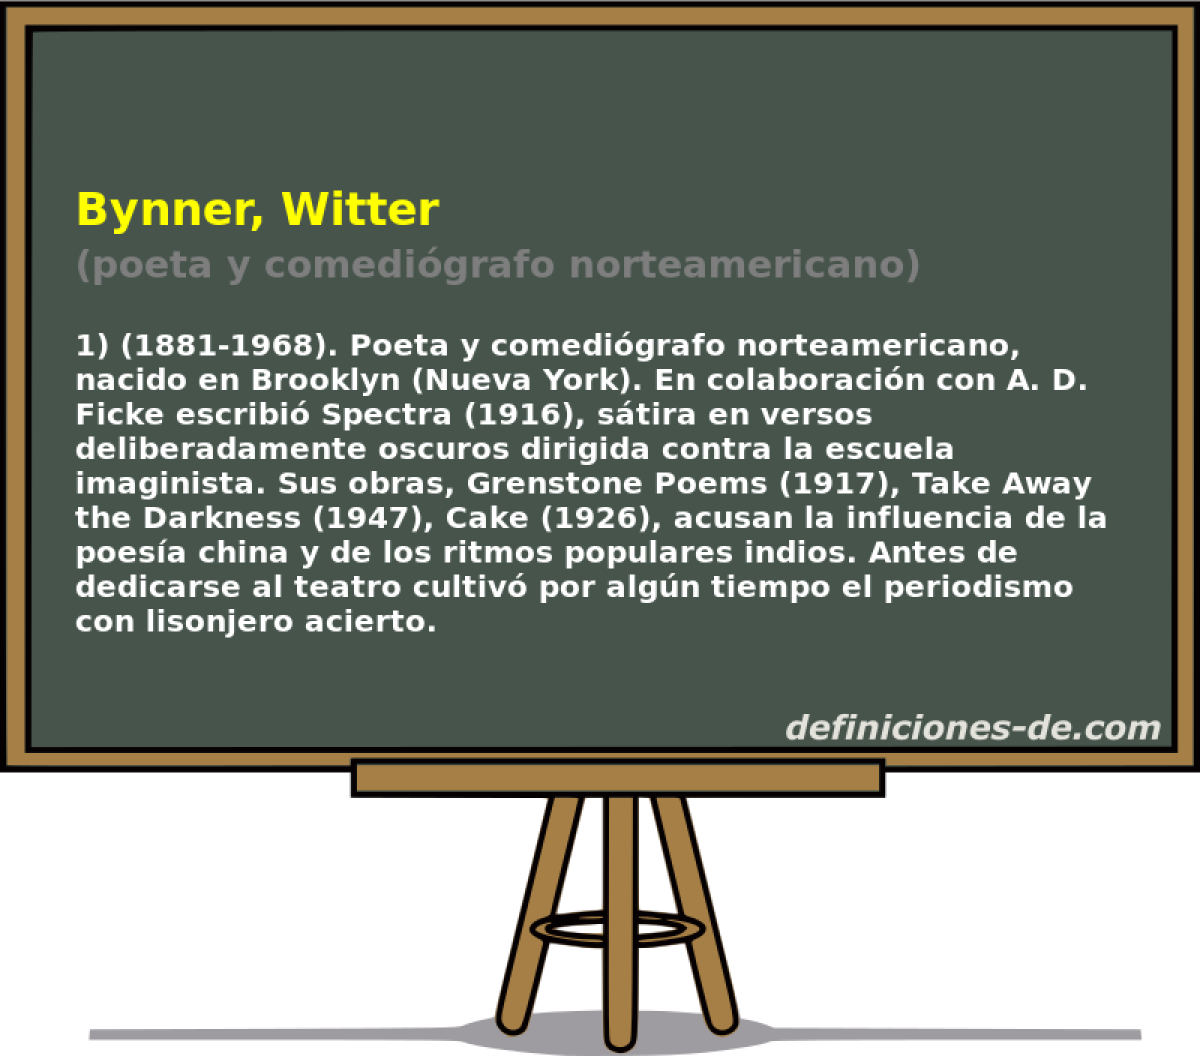 Bynner, Witter (poeta y comedigrafo norteamericano)